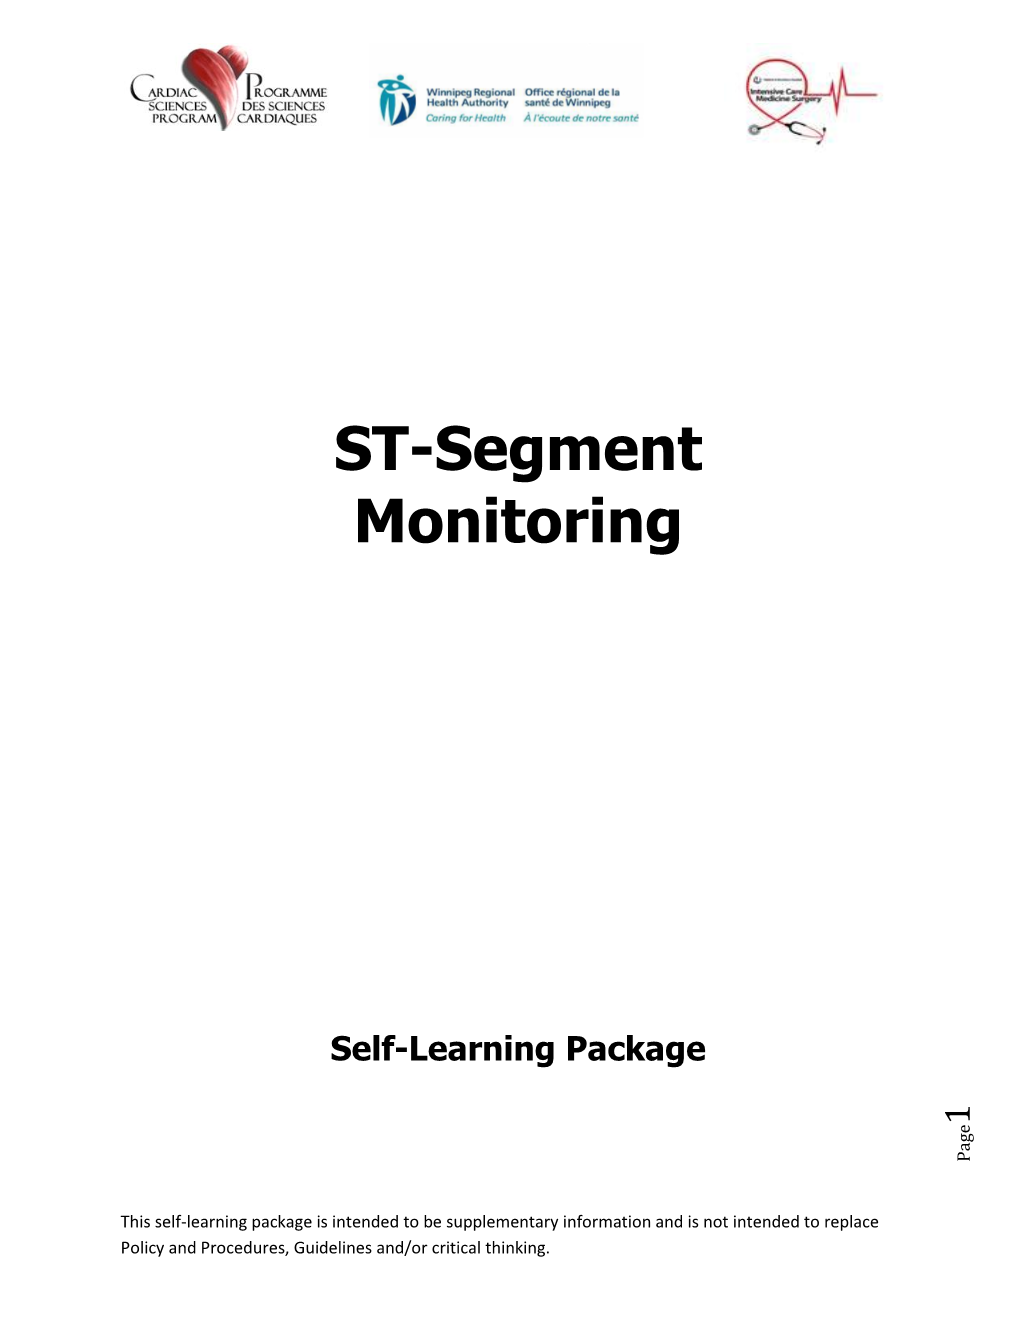 Regional ST-Segment Monitoring Self